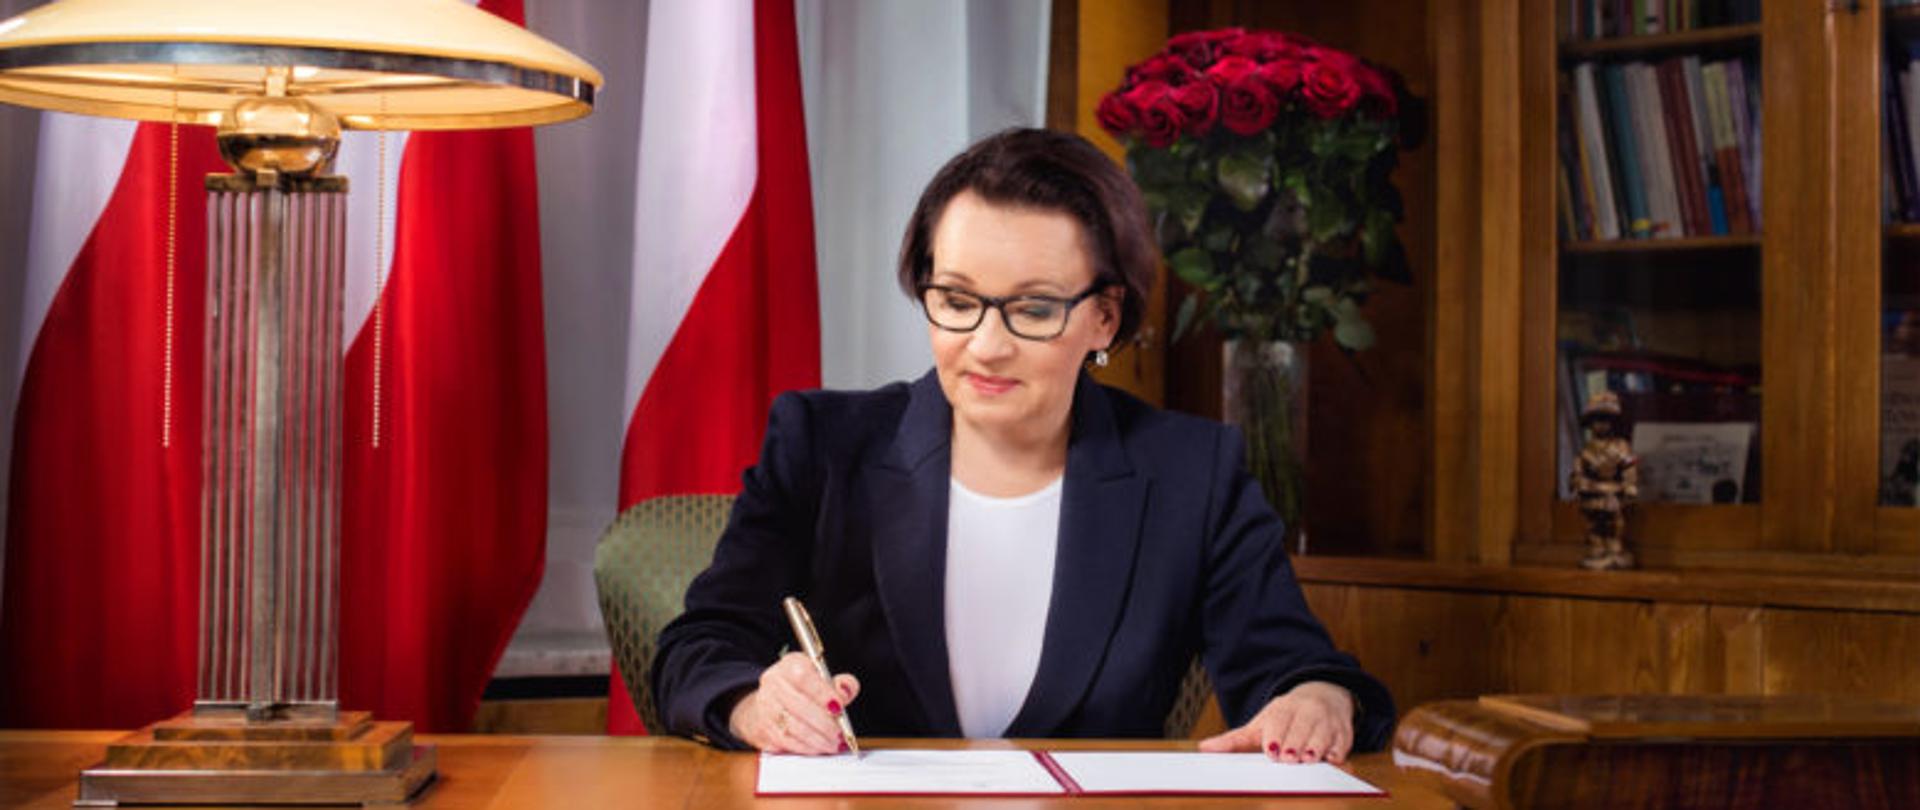 Minister Anna Zalewska podpisuje list przy biurku